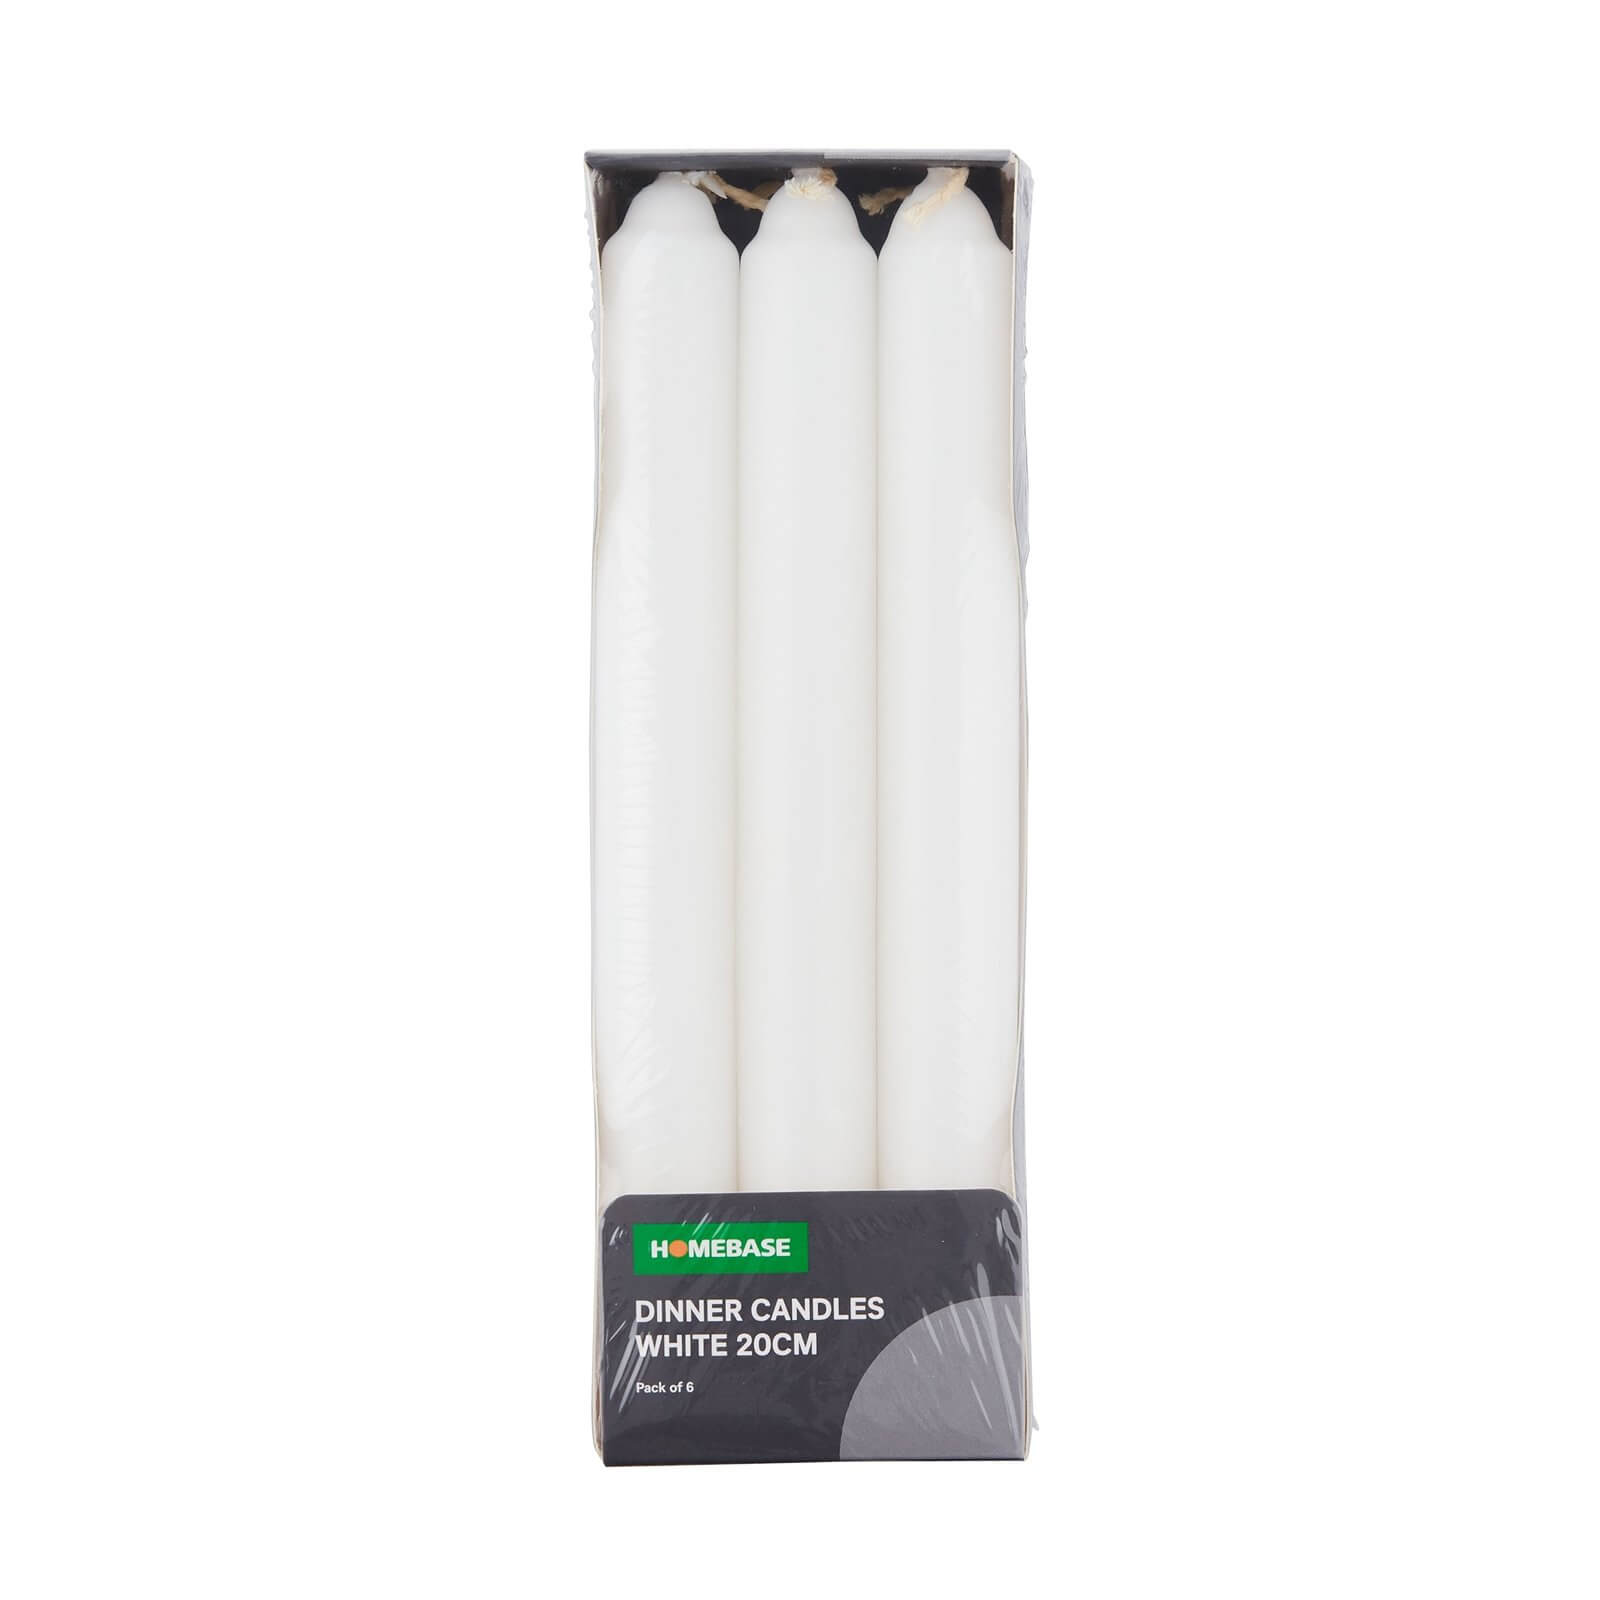 Pack of 6 Dinner Candles - White - 20cm